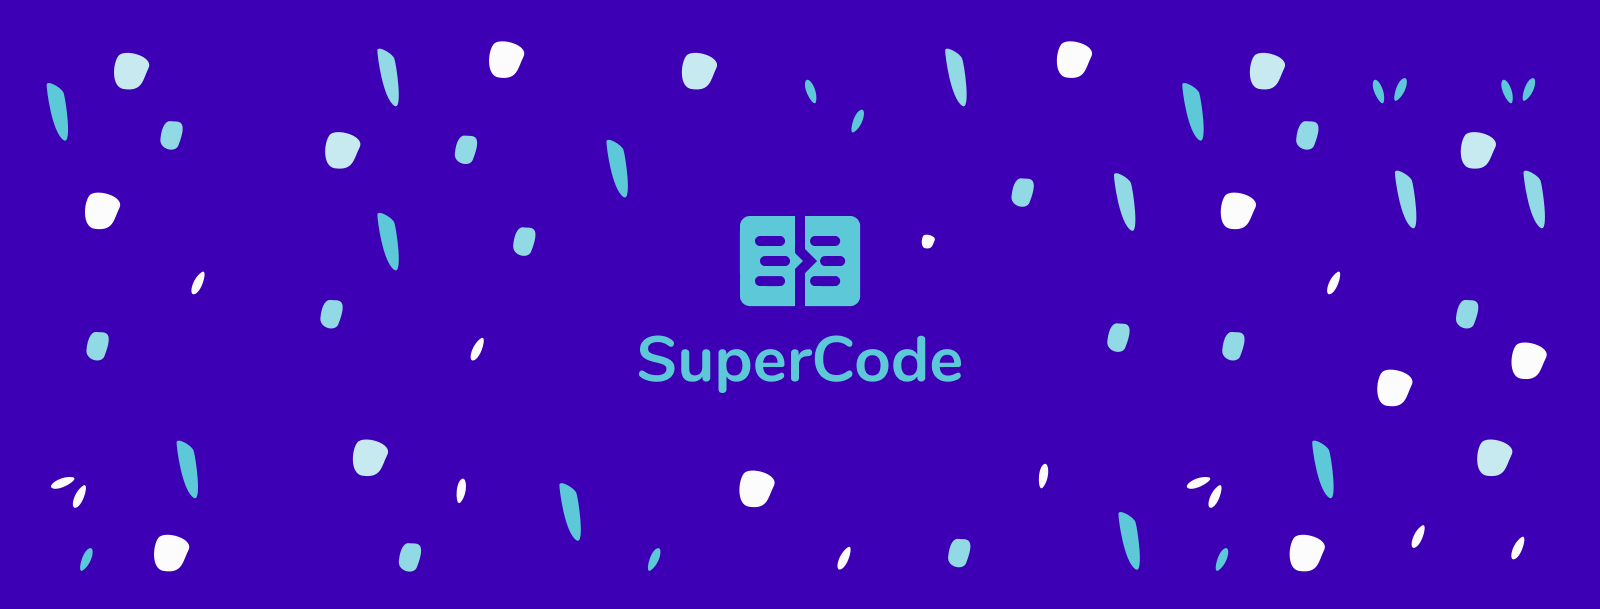 Introducing SuperCode